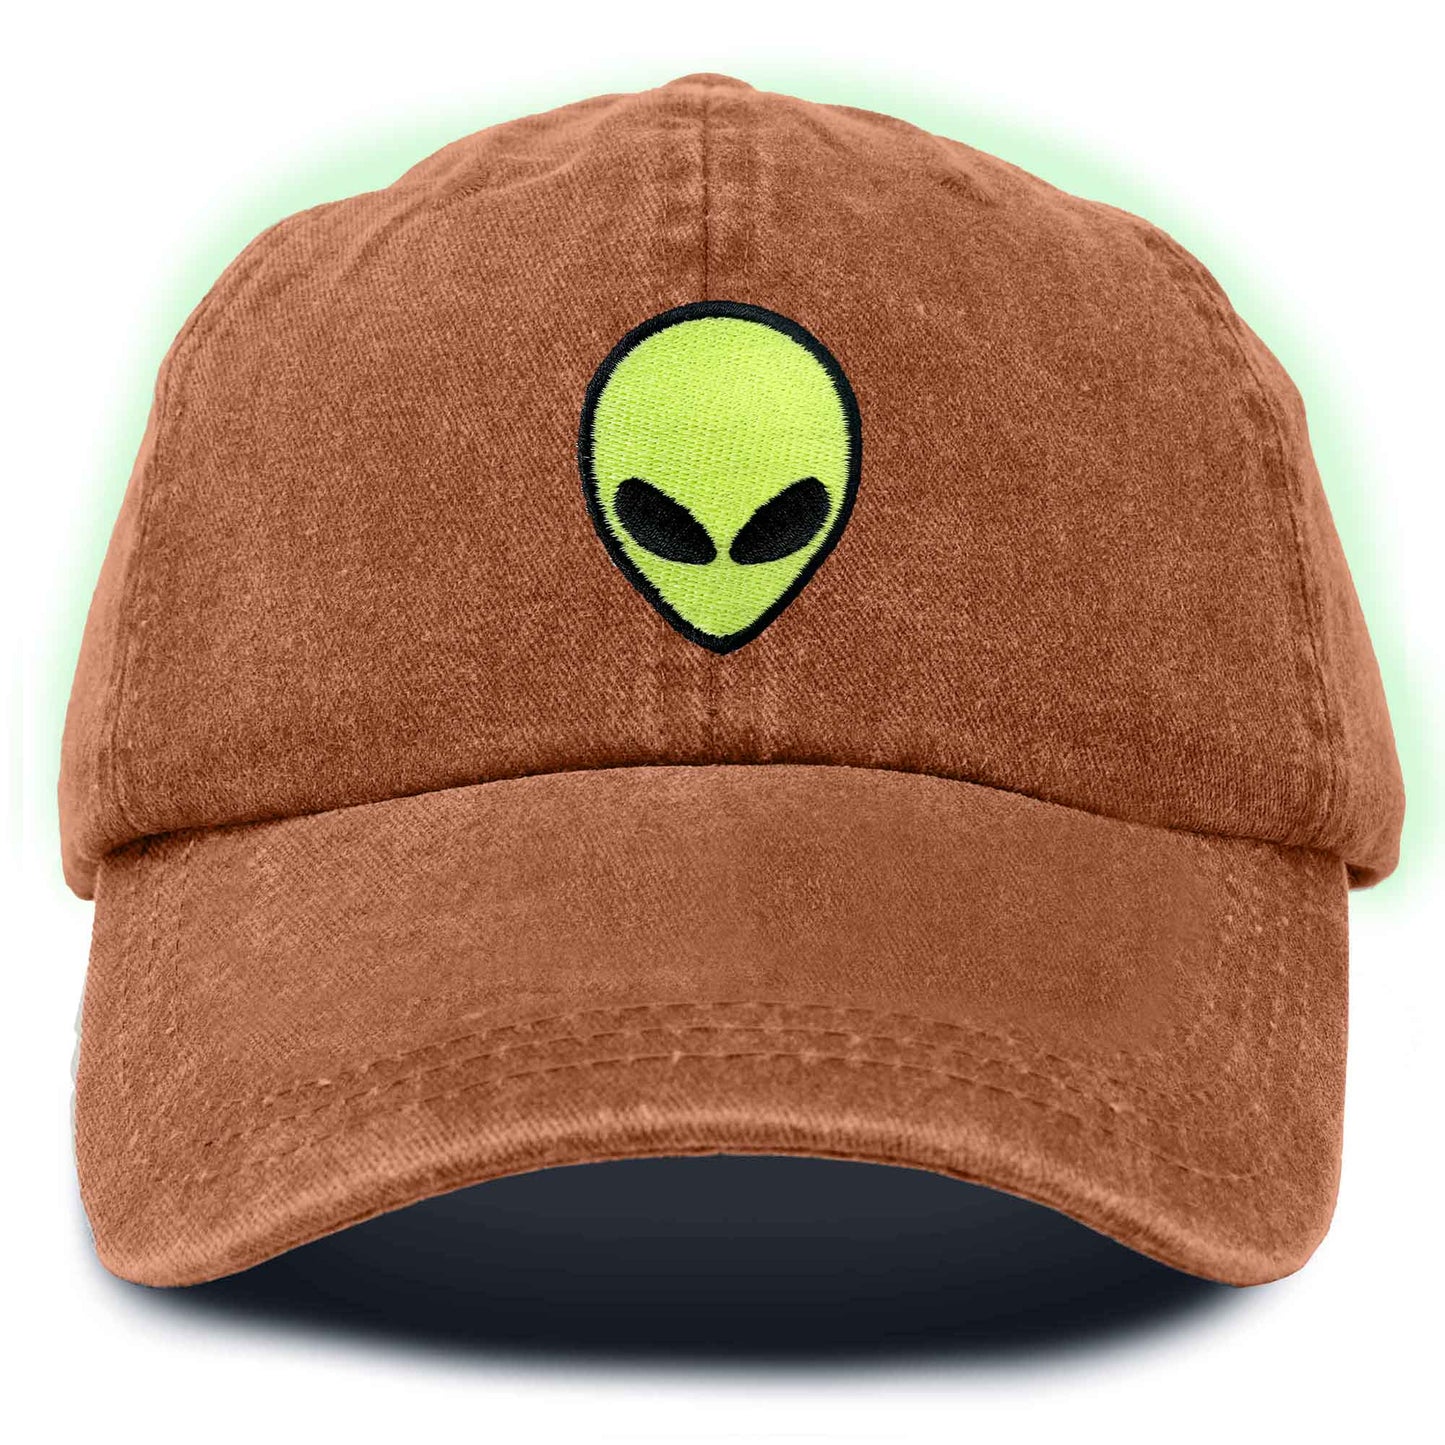 Dalix Alien Hat (Glow in the Dark)